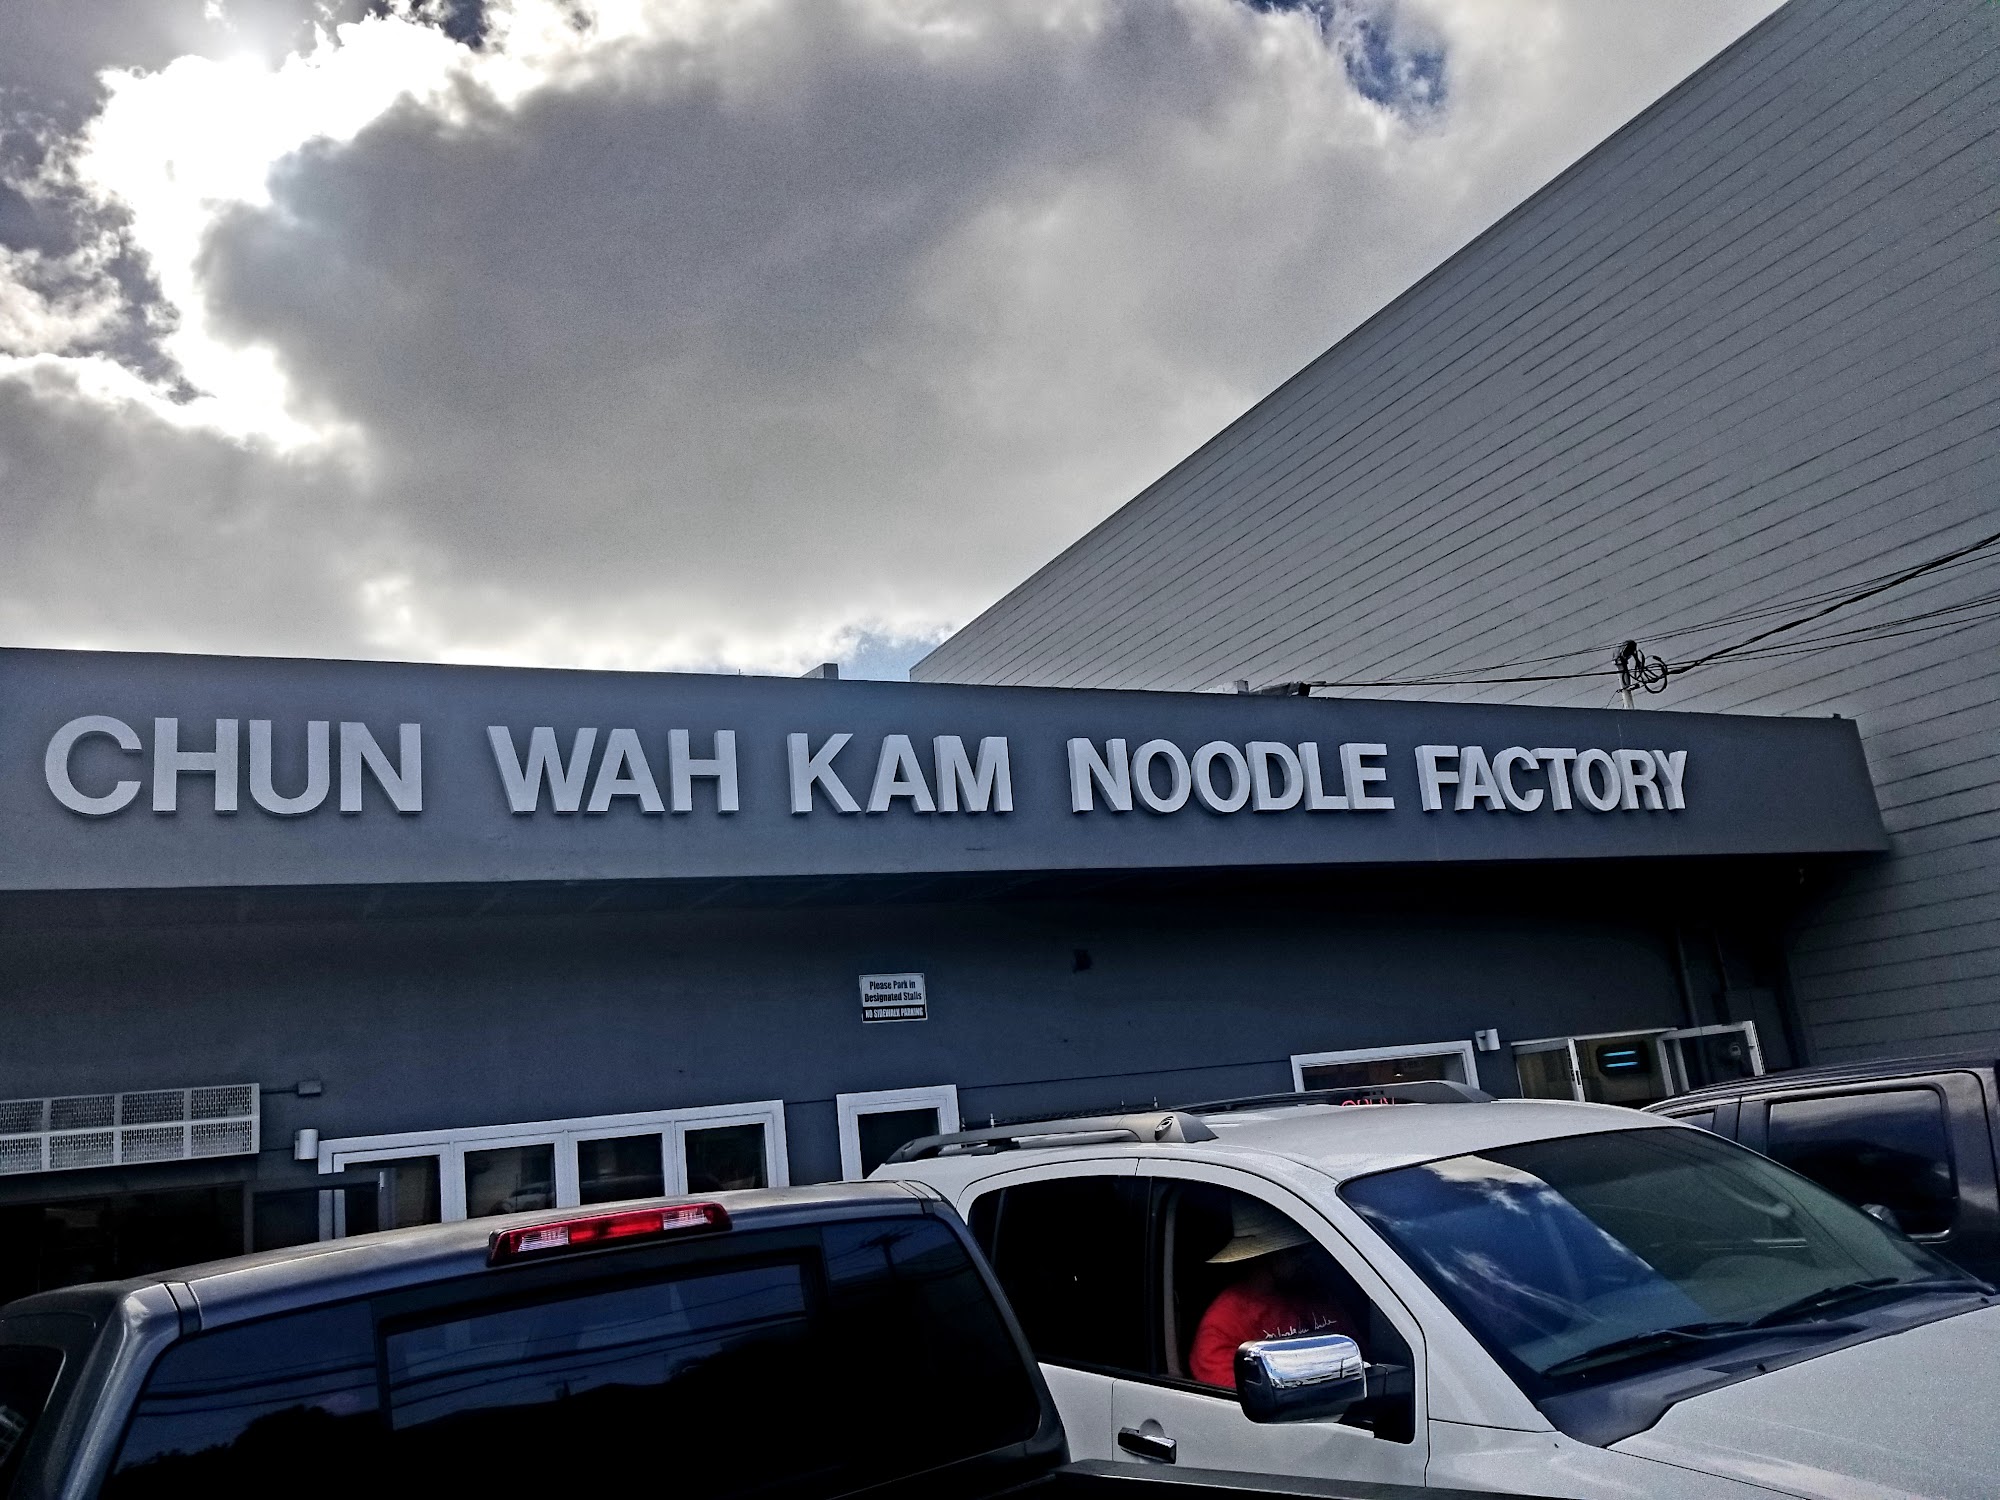 Chun Wah Kam Noodle Factory